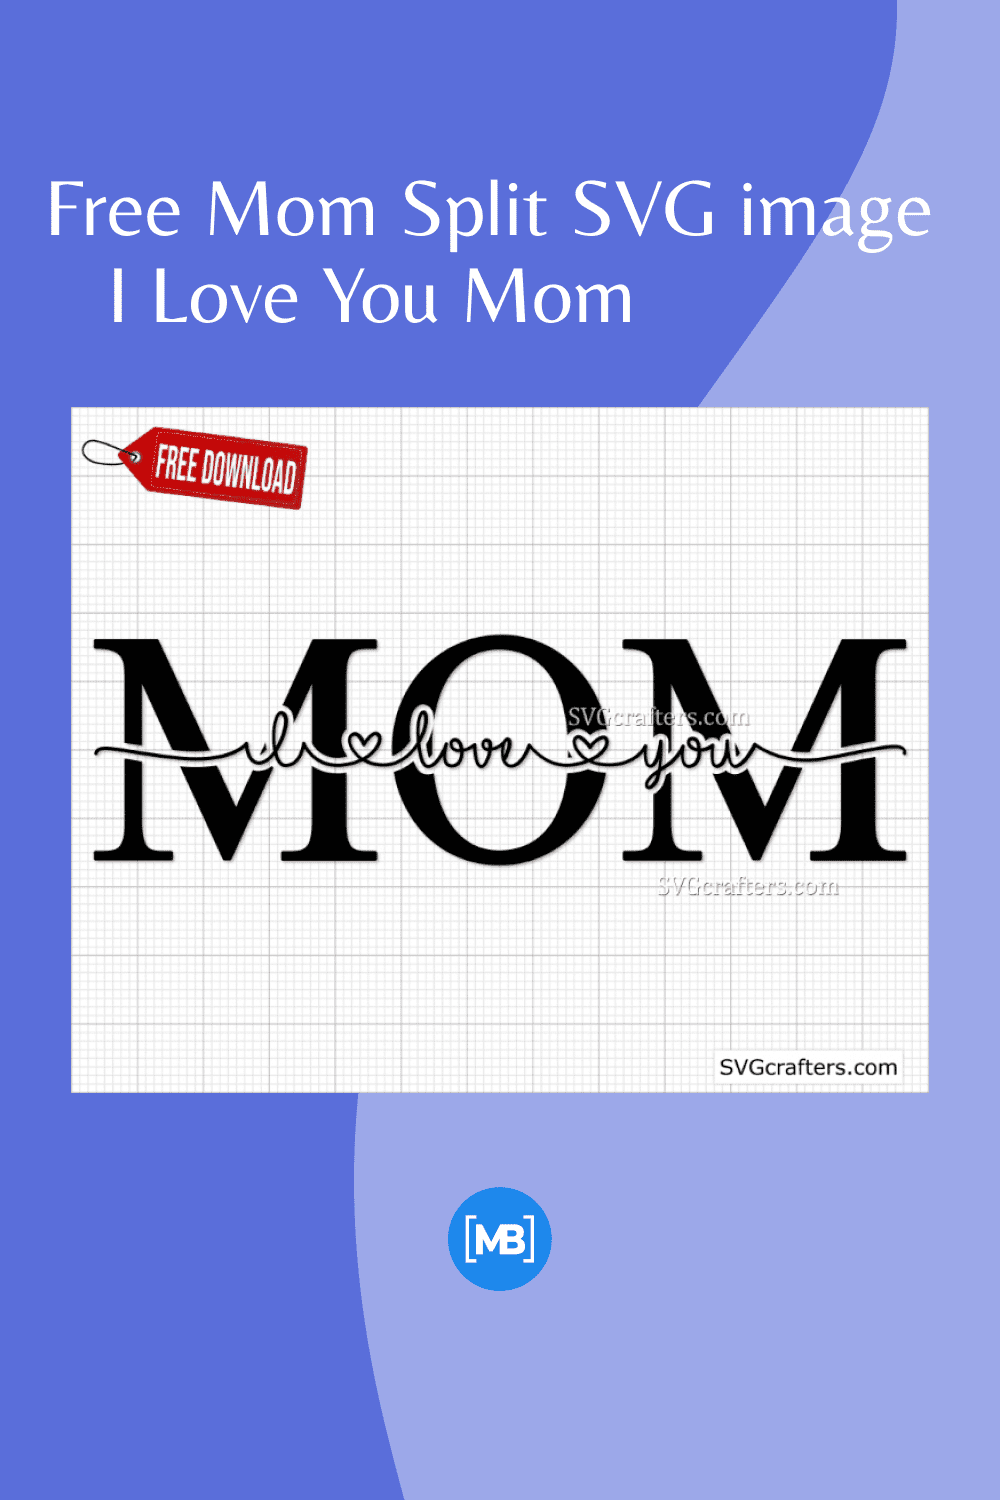 Free Mom Split SVG image I Love You Mom.